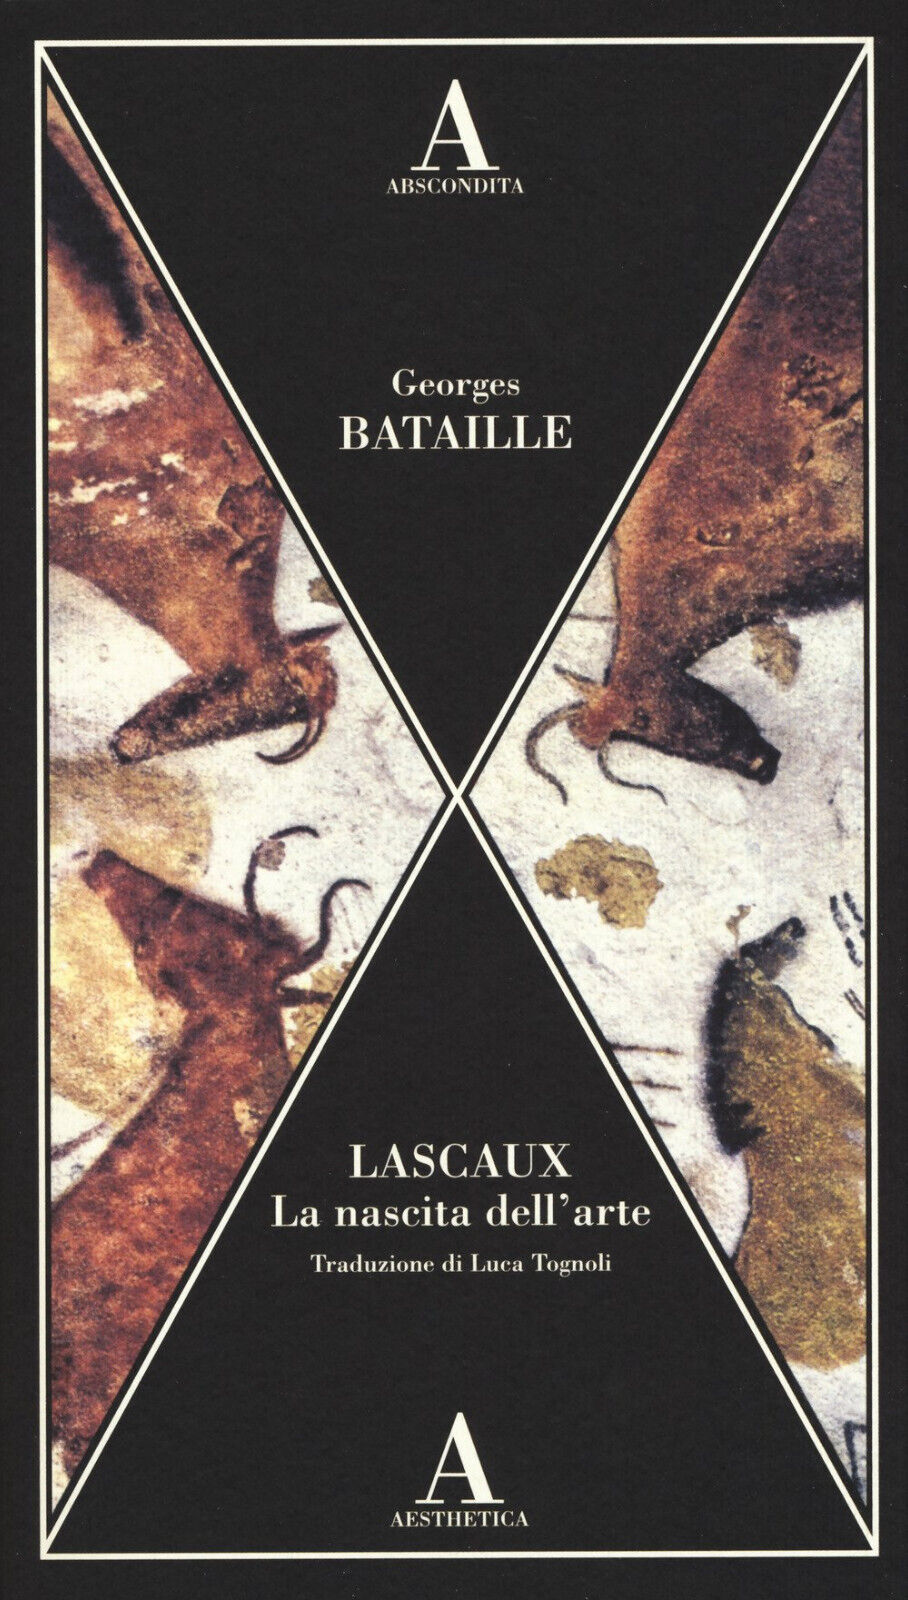 Lascaux. La nascita dell'arte - Georges Bataille - Abscondita, 2017